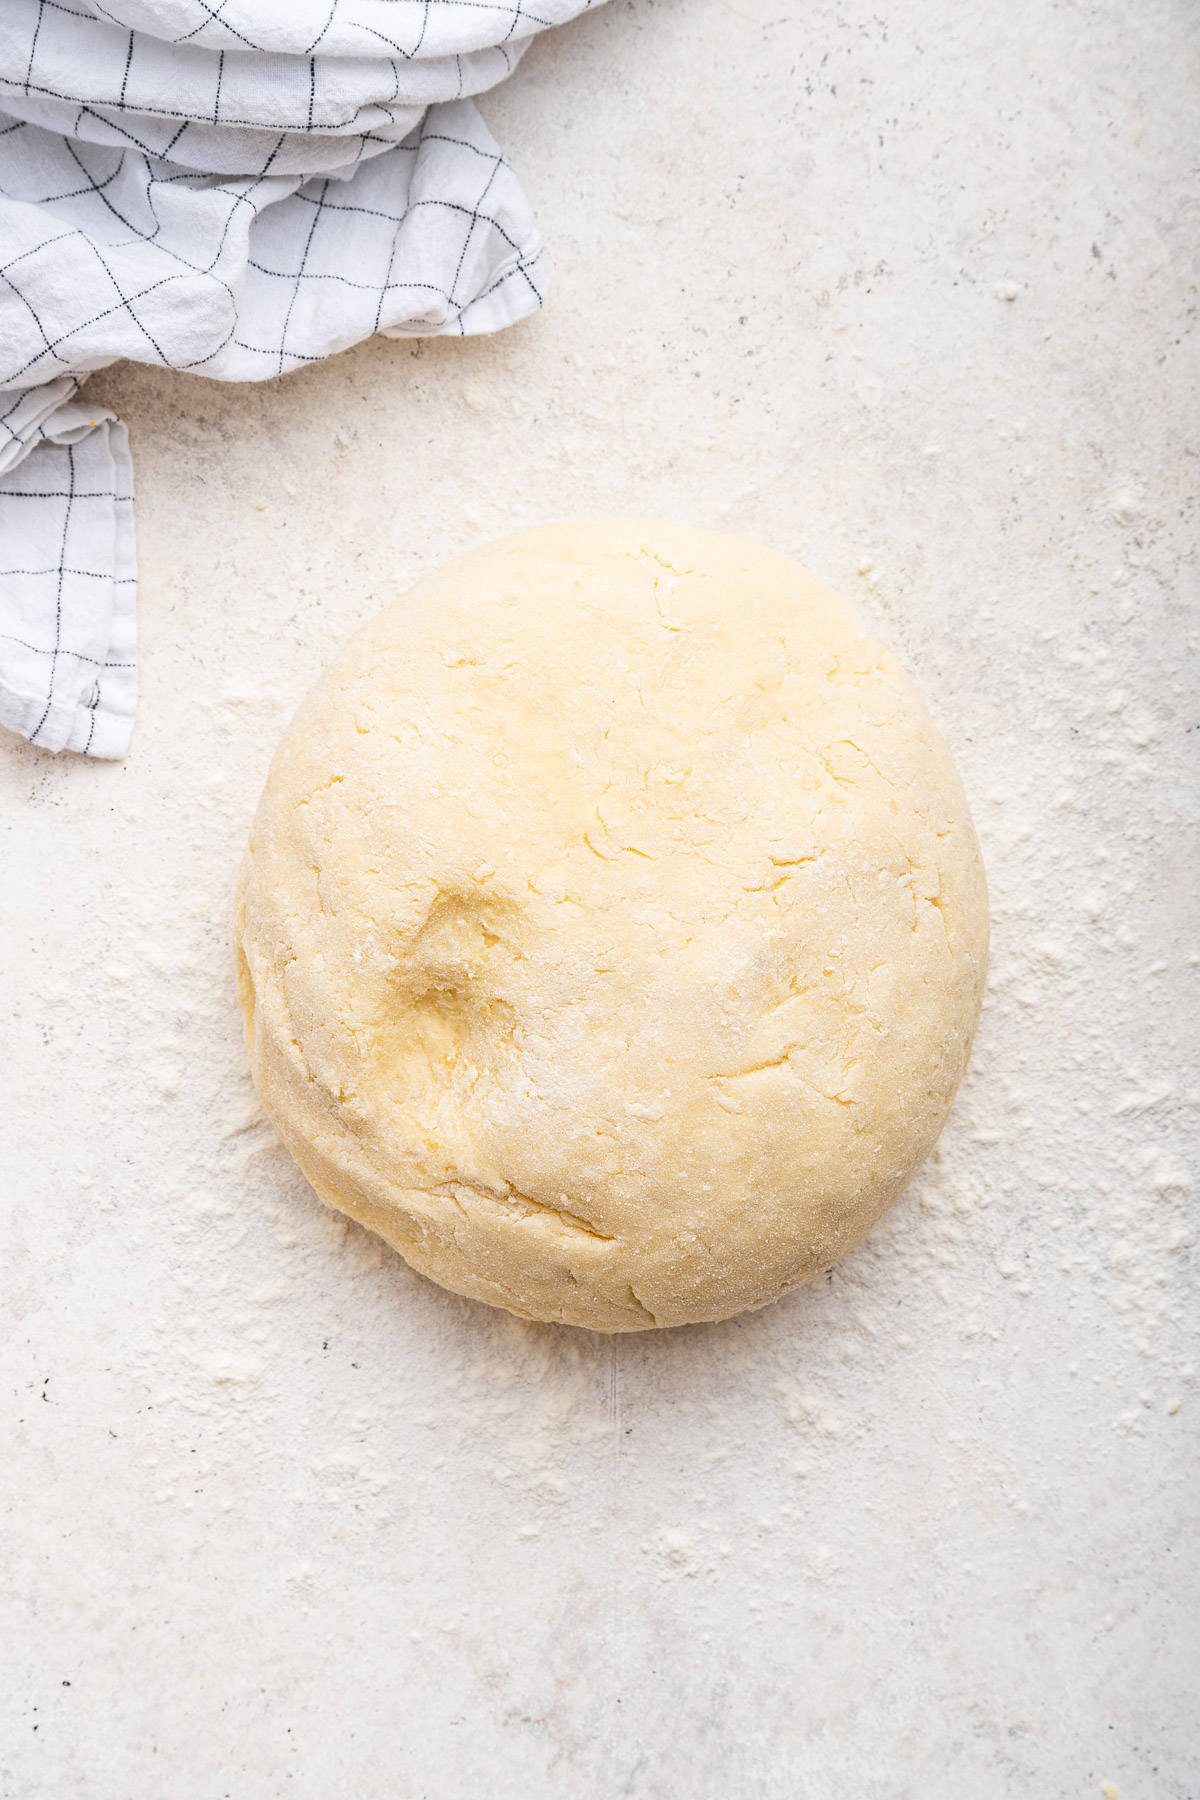 Dough ball to make potato gnocchi.